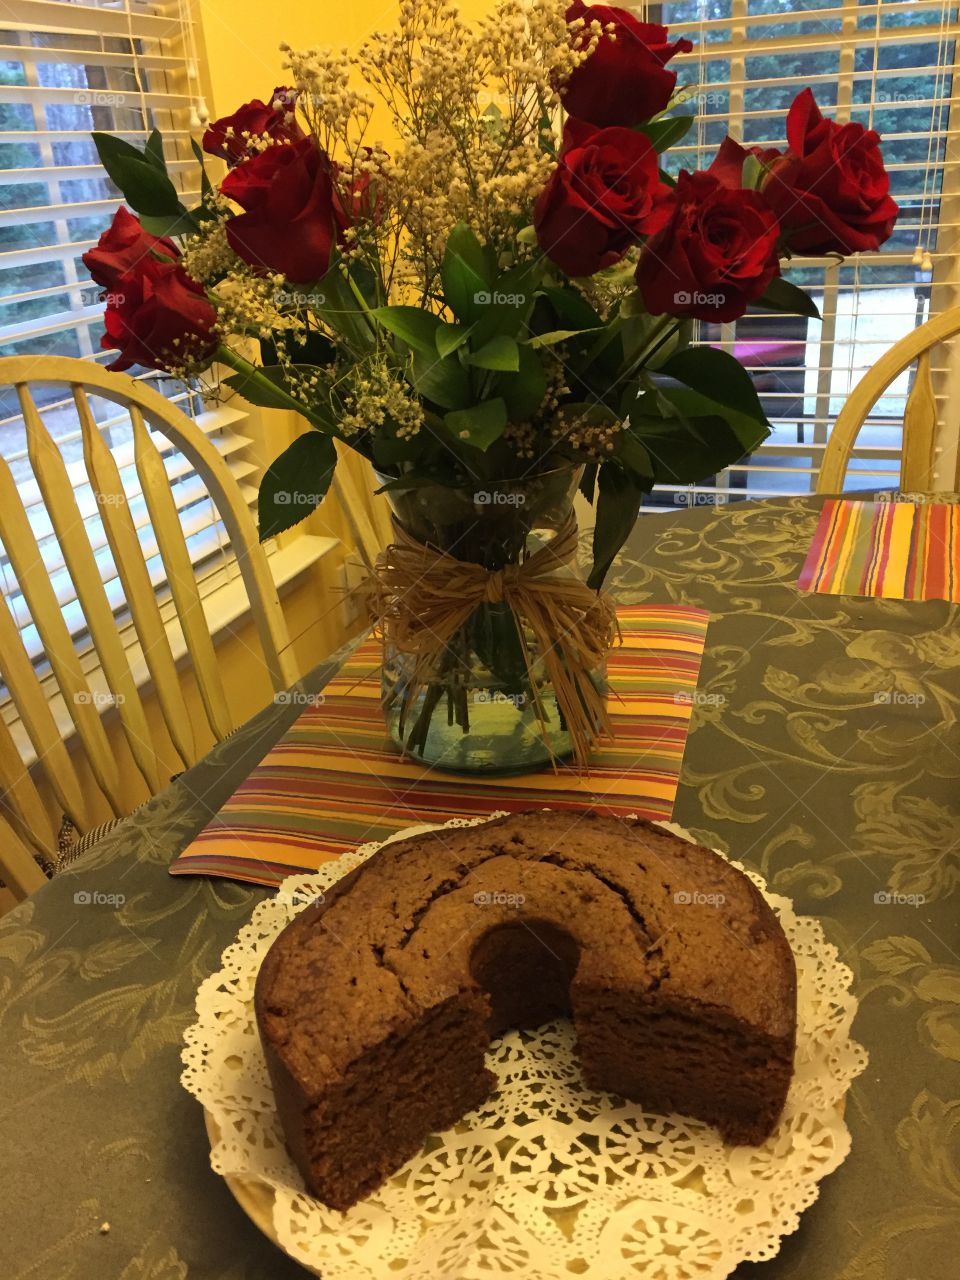 Valentine Roses and Valentine Chocolate Pound Cake
